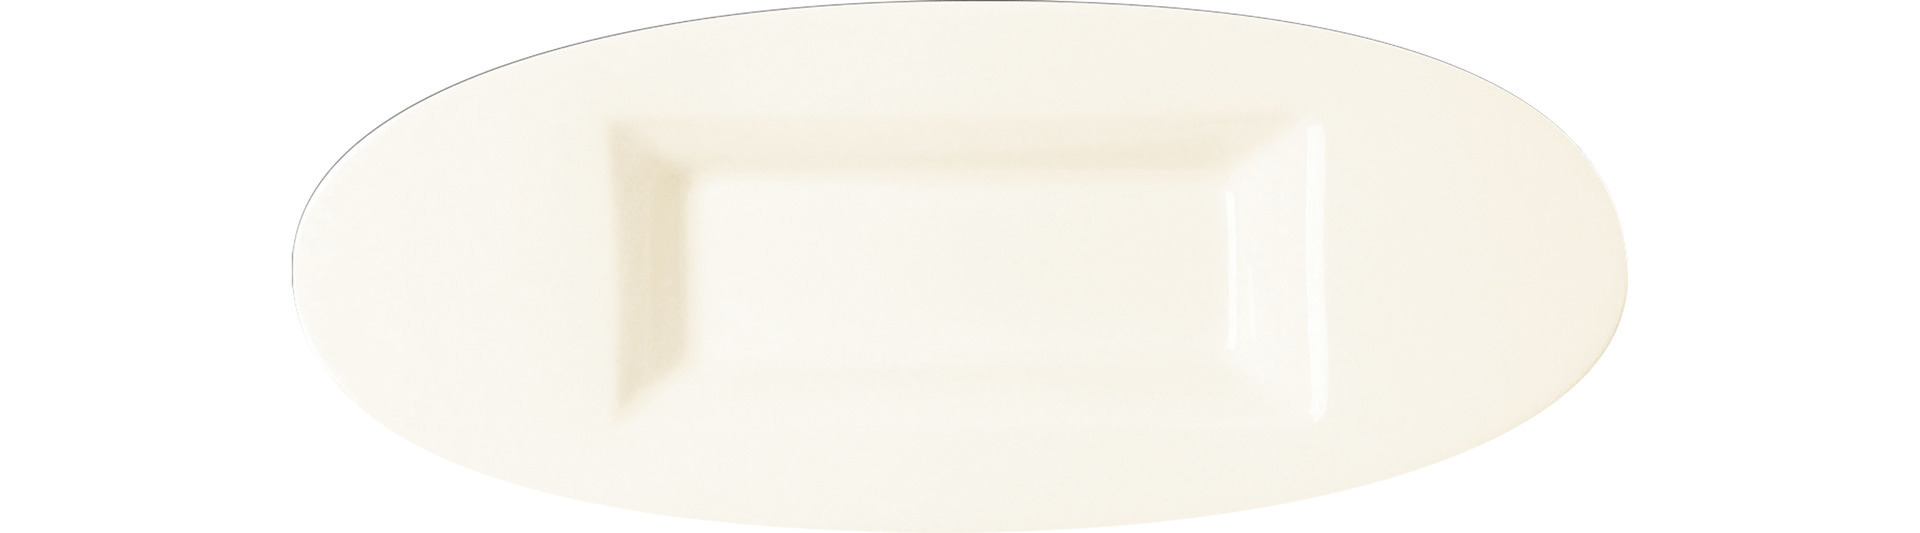 Platte oval 1 rechteckige Fläche Tamarind 300 x 120 mm crème